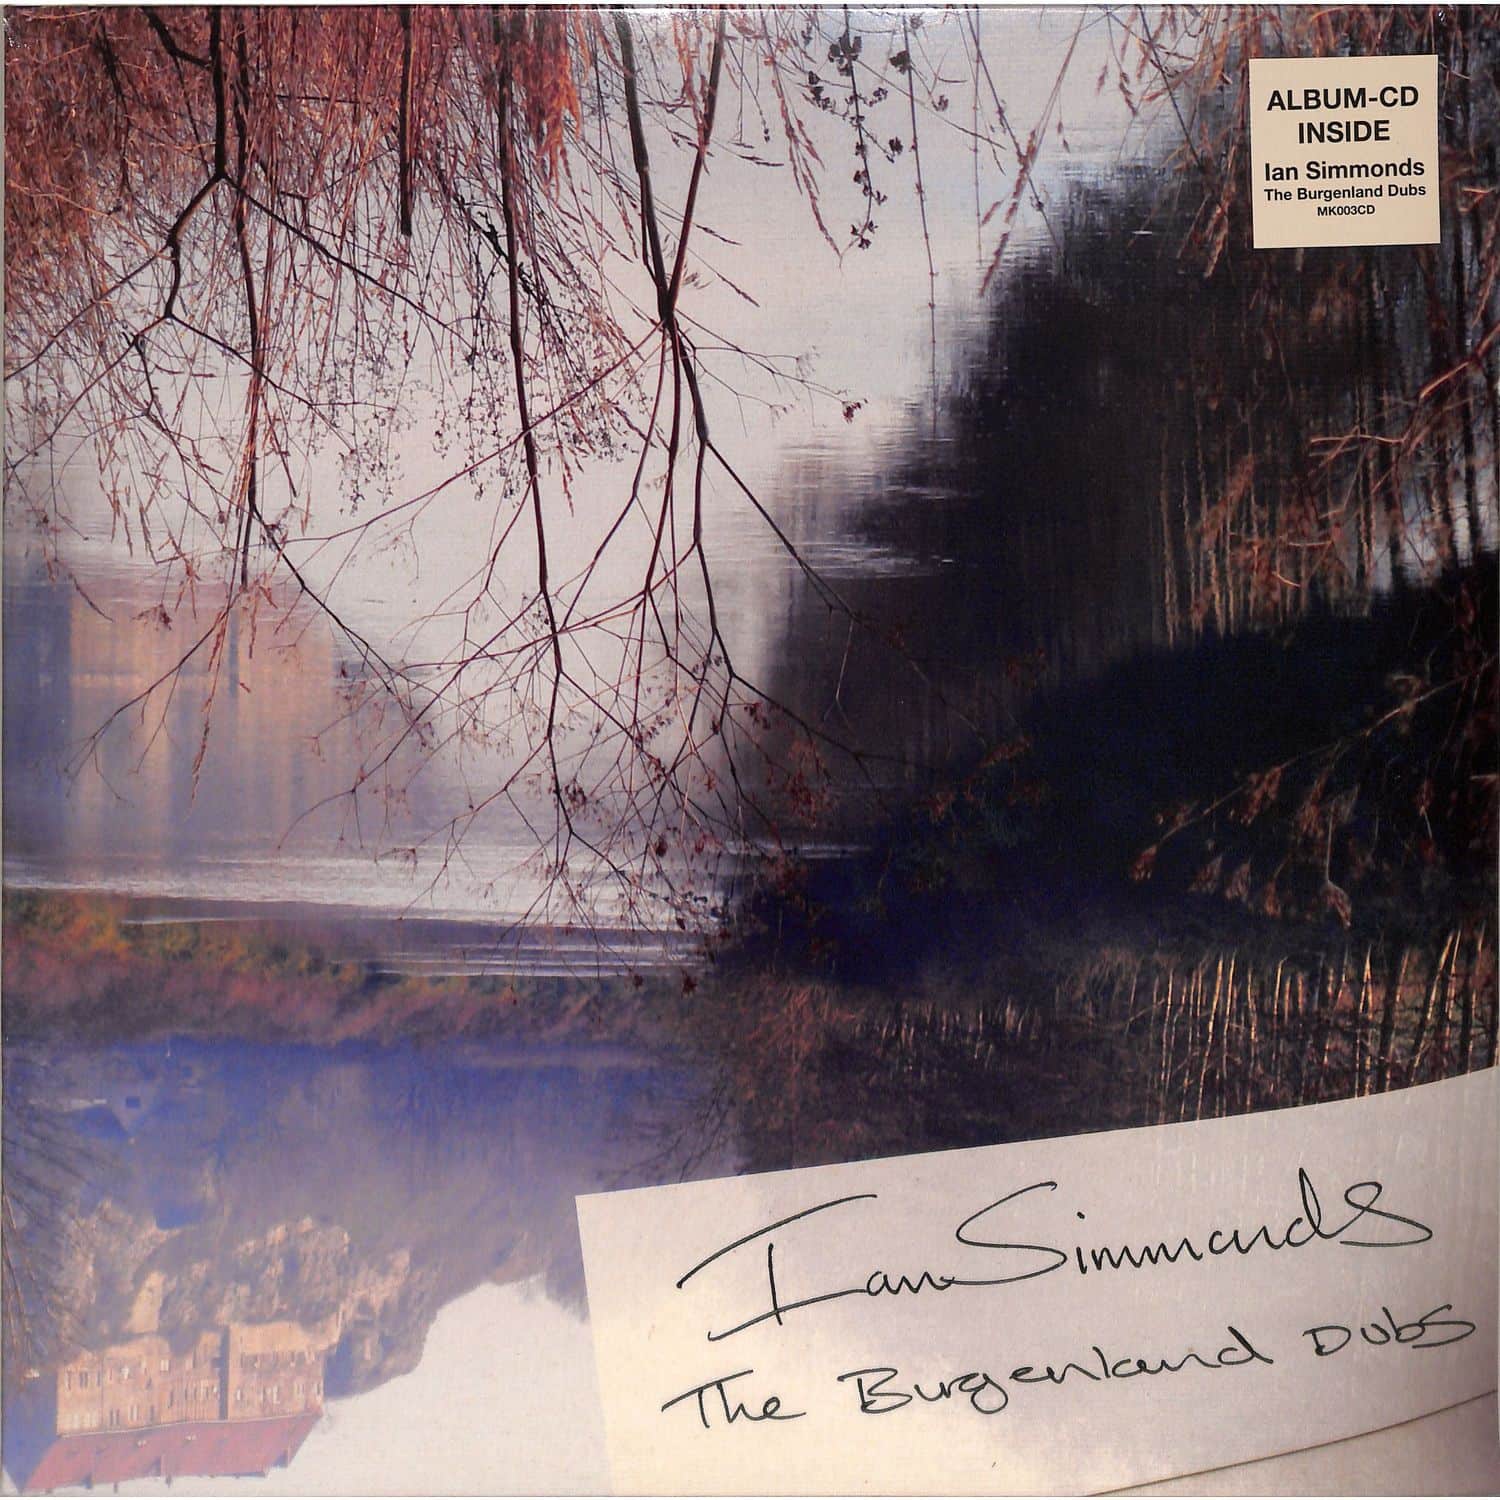 Ian Simmonds - THE BURGENLAND DUBS 